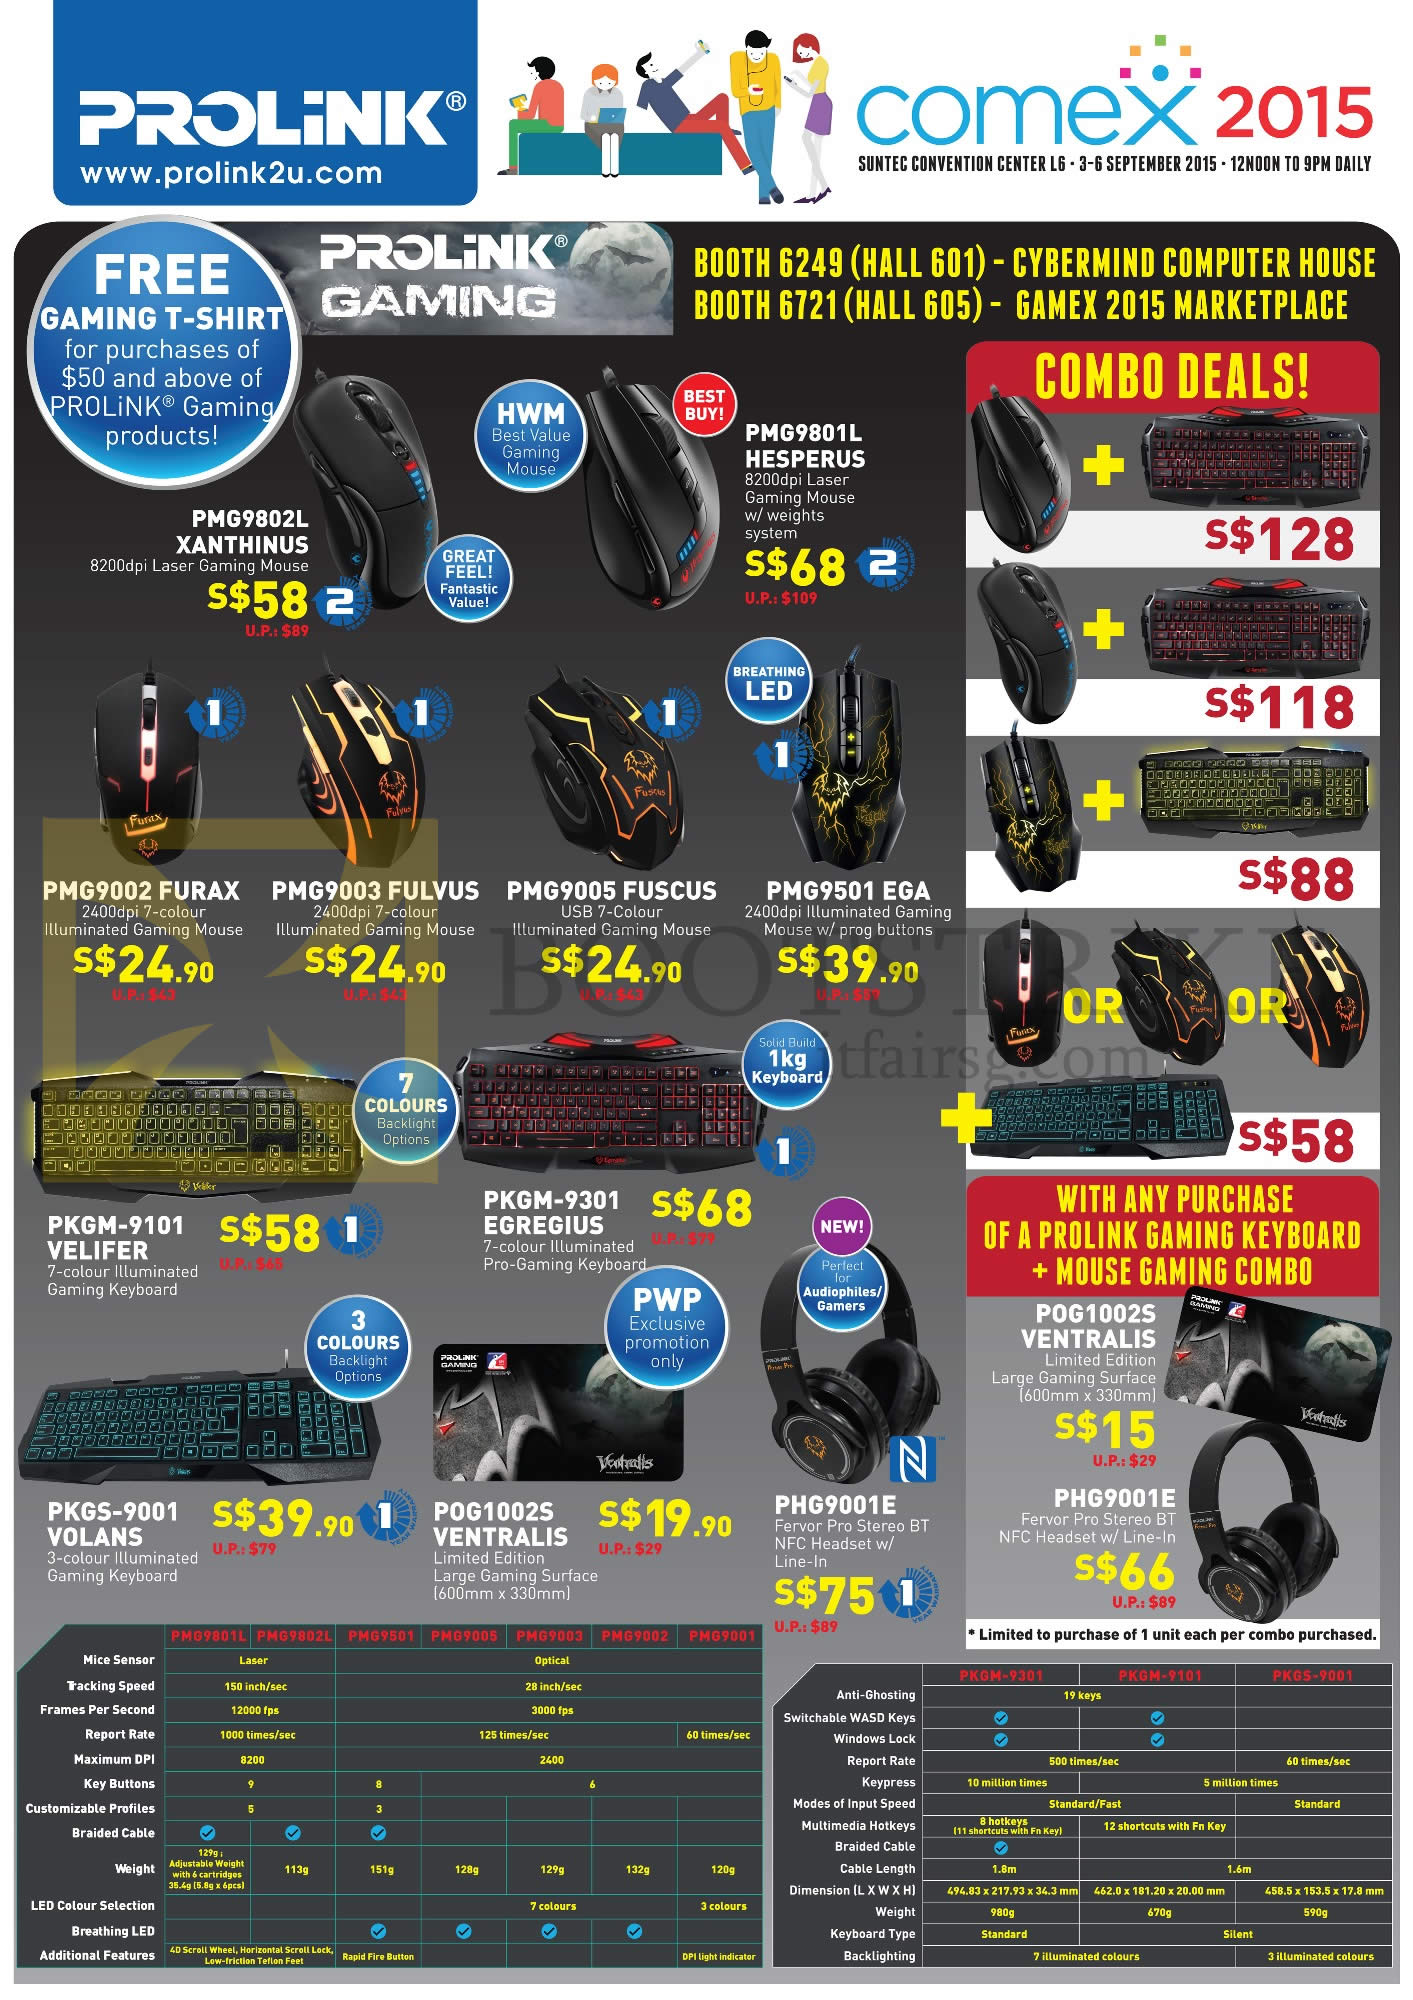 COMEX 2015 price list image brochure of Prolink Gaming Keyboard, Mouse, Headset, PMG9802L Xanthinus, PMG9801L Hesperus, PKGM-9101 Velifer, POG1002S Ventralis